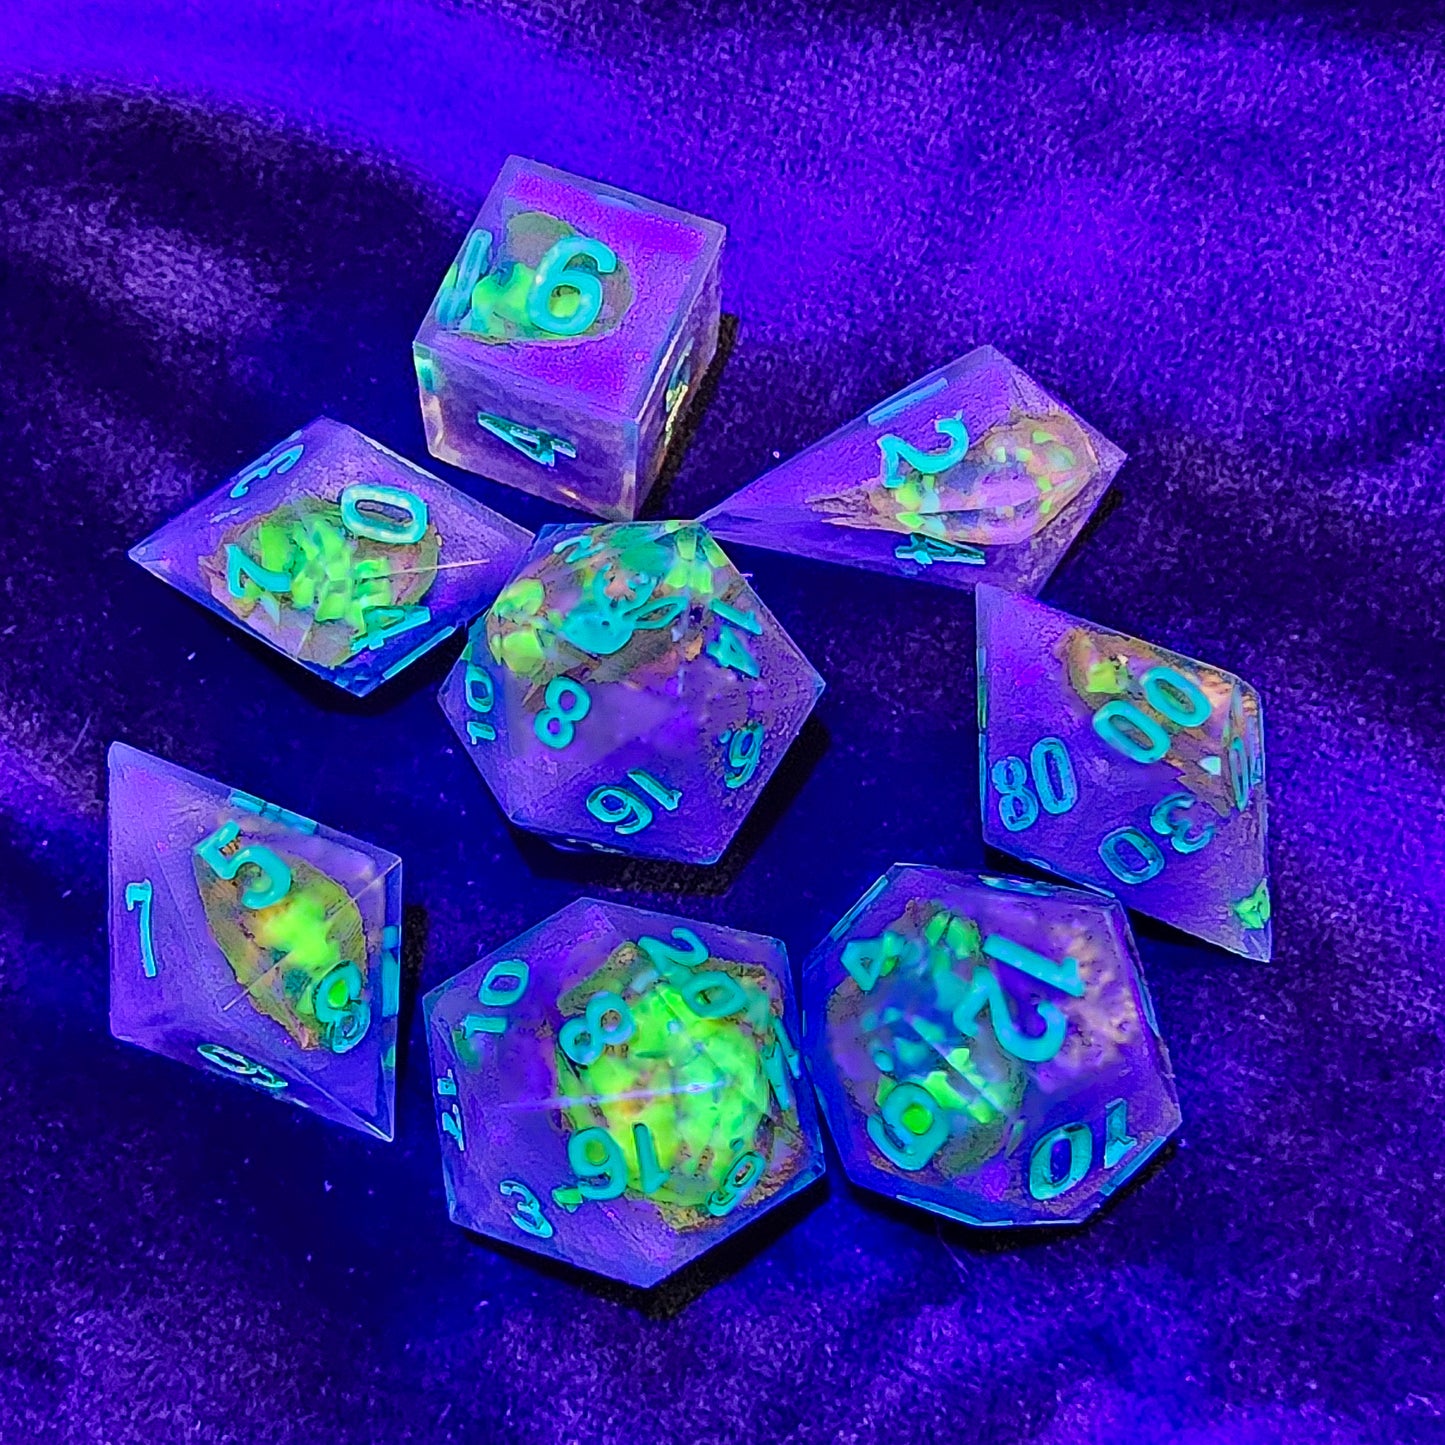 Radioactive 8 piece dice set